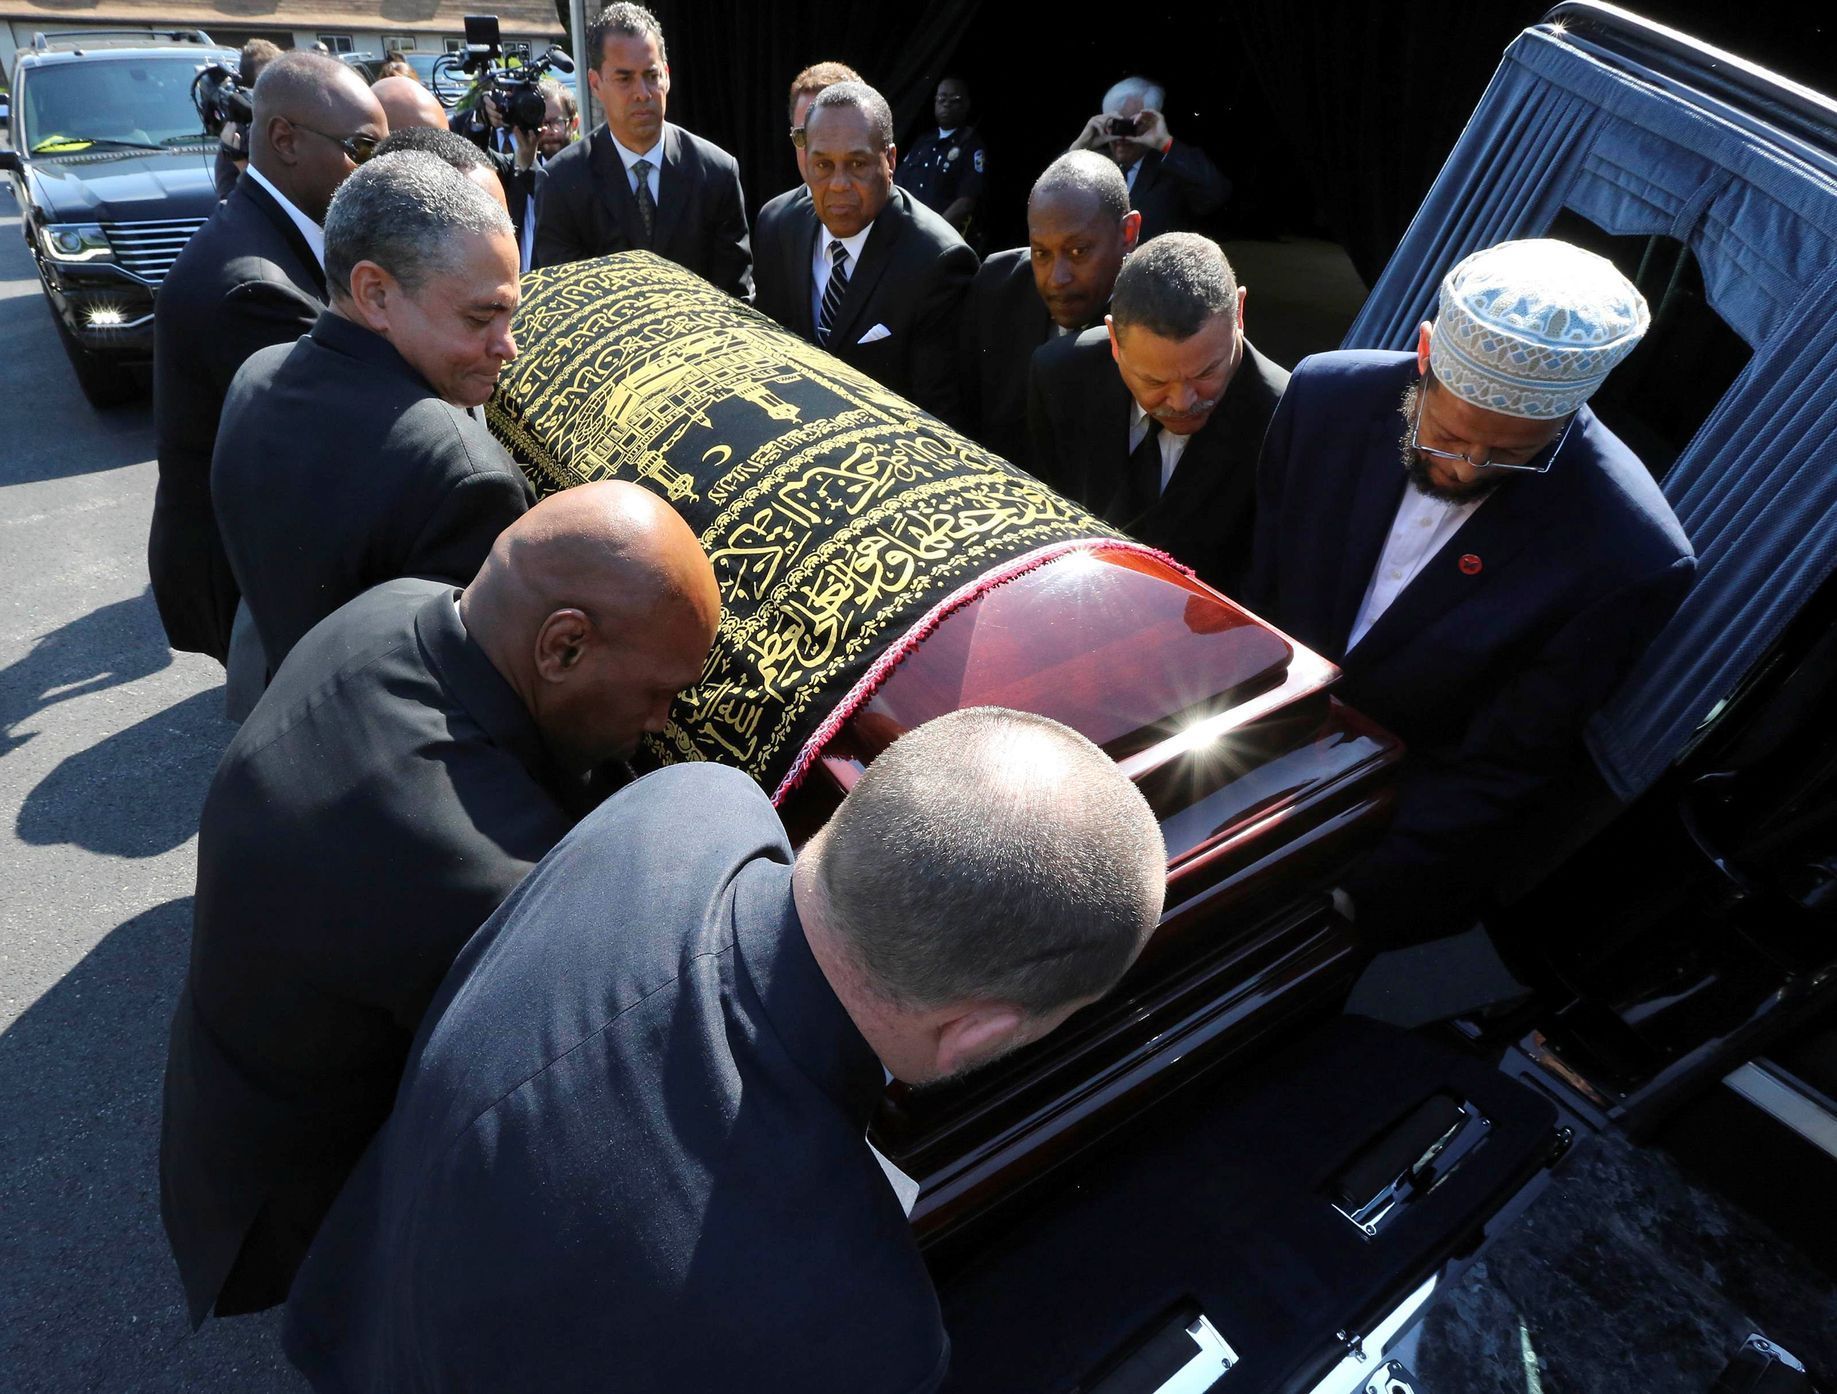 Pohřeb Muhammada Aliho